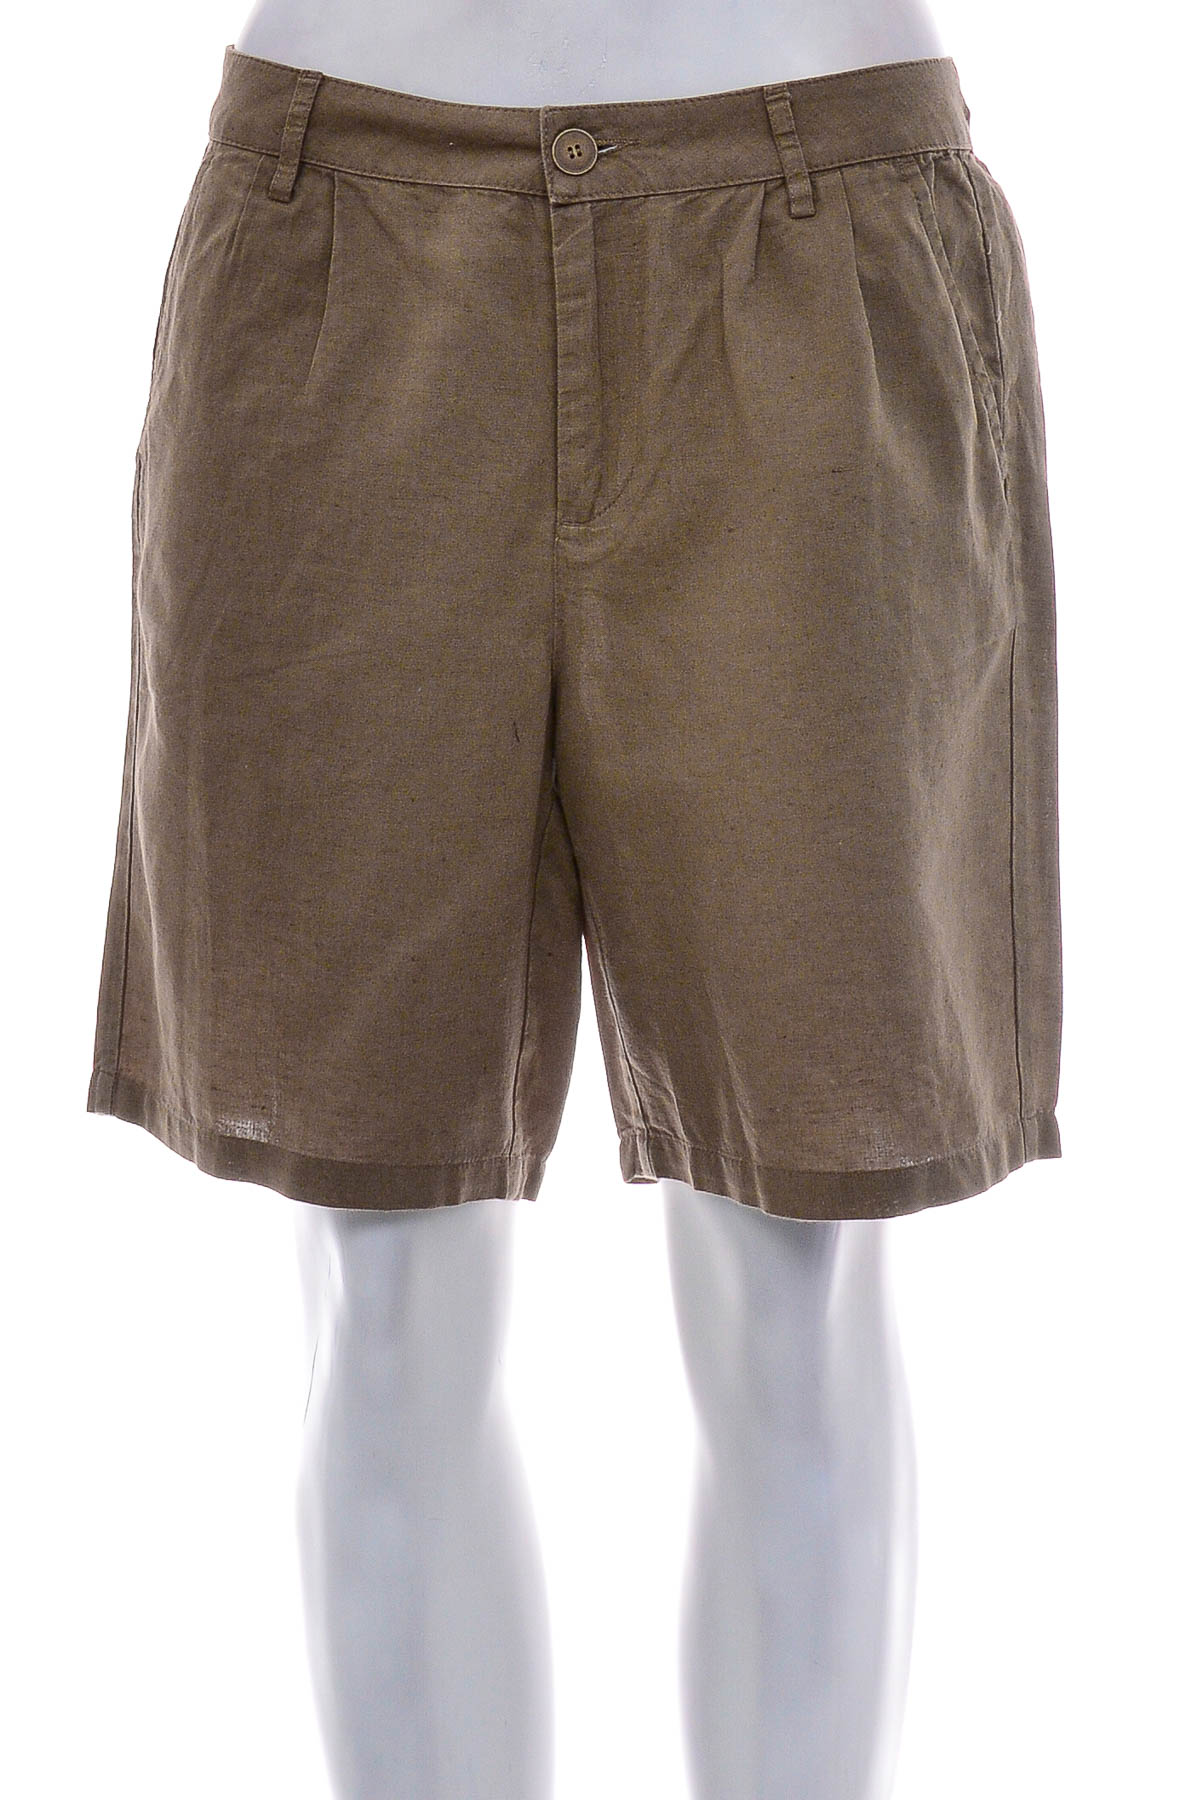 Female shorts - Stile Benetton - 0